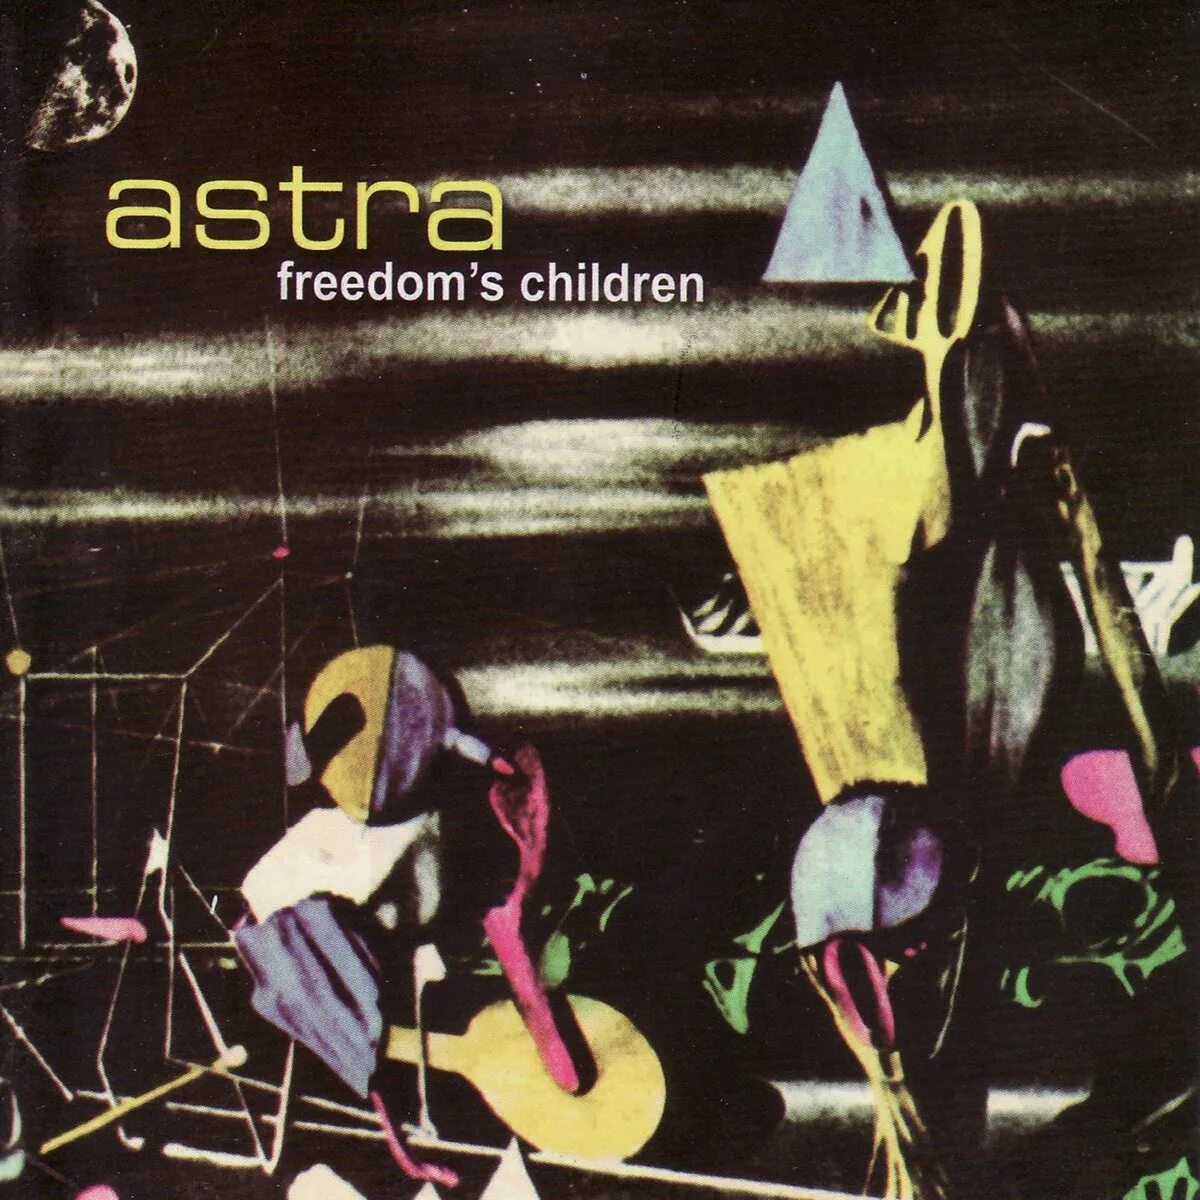 Freedom's children - Astra (1970. Freedom's children - Galactic Vibes (1971). 1970'S children. Freedom's children